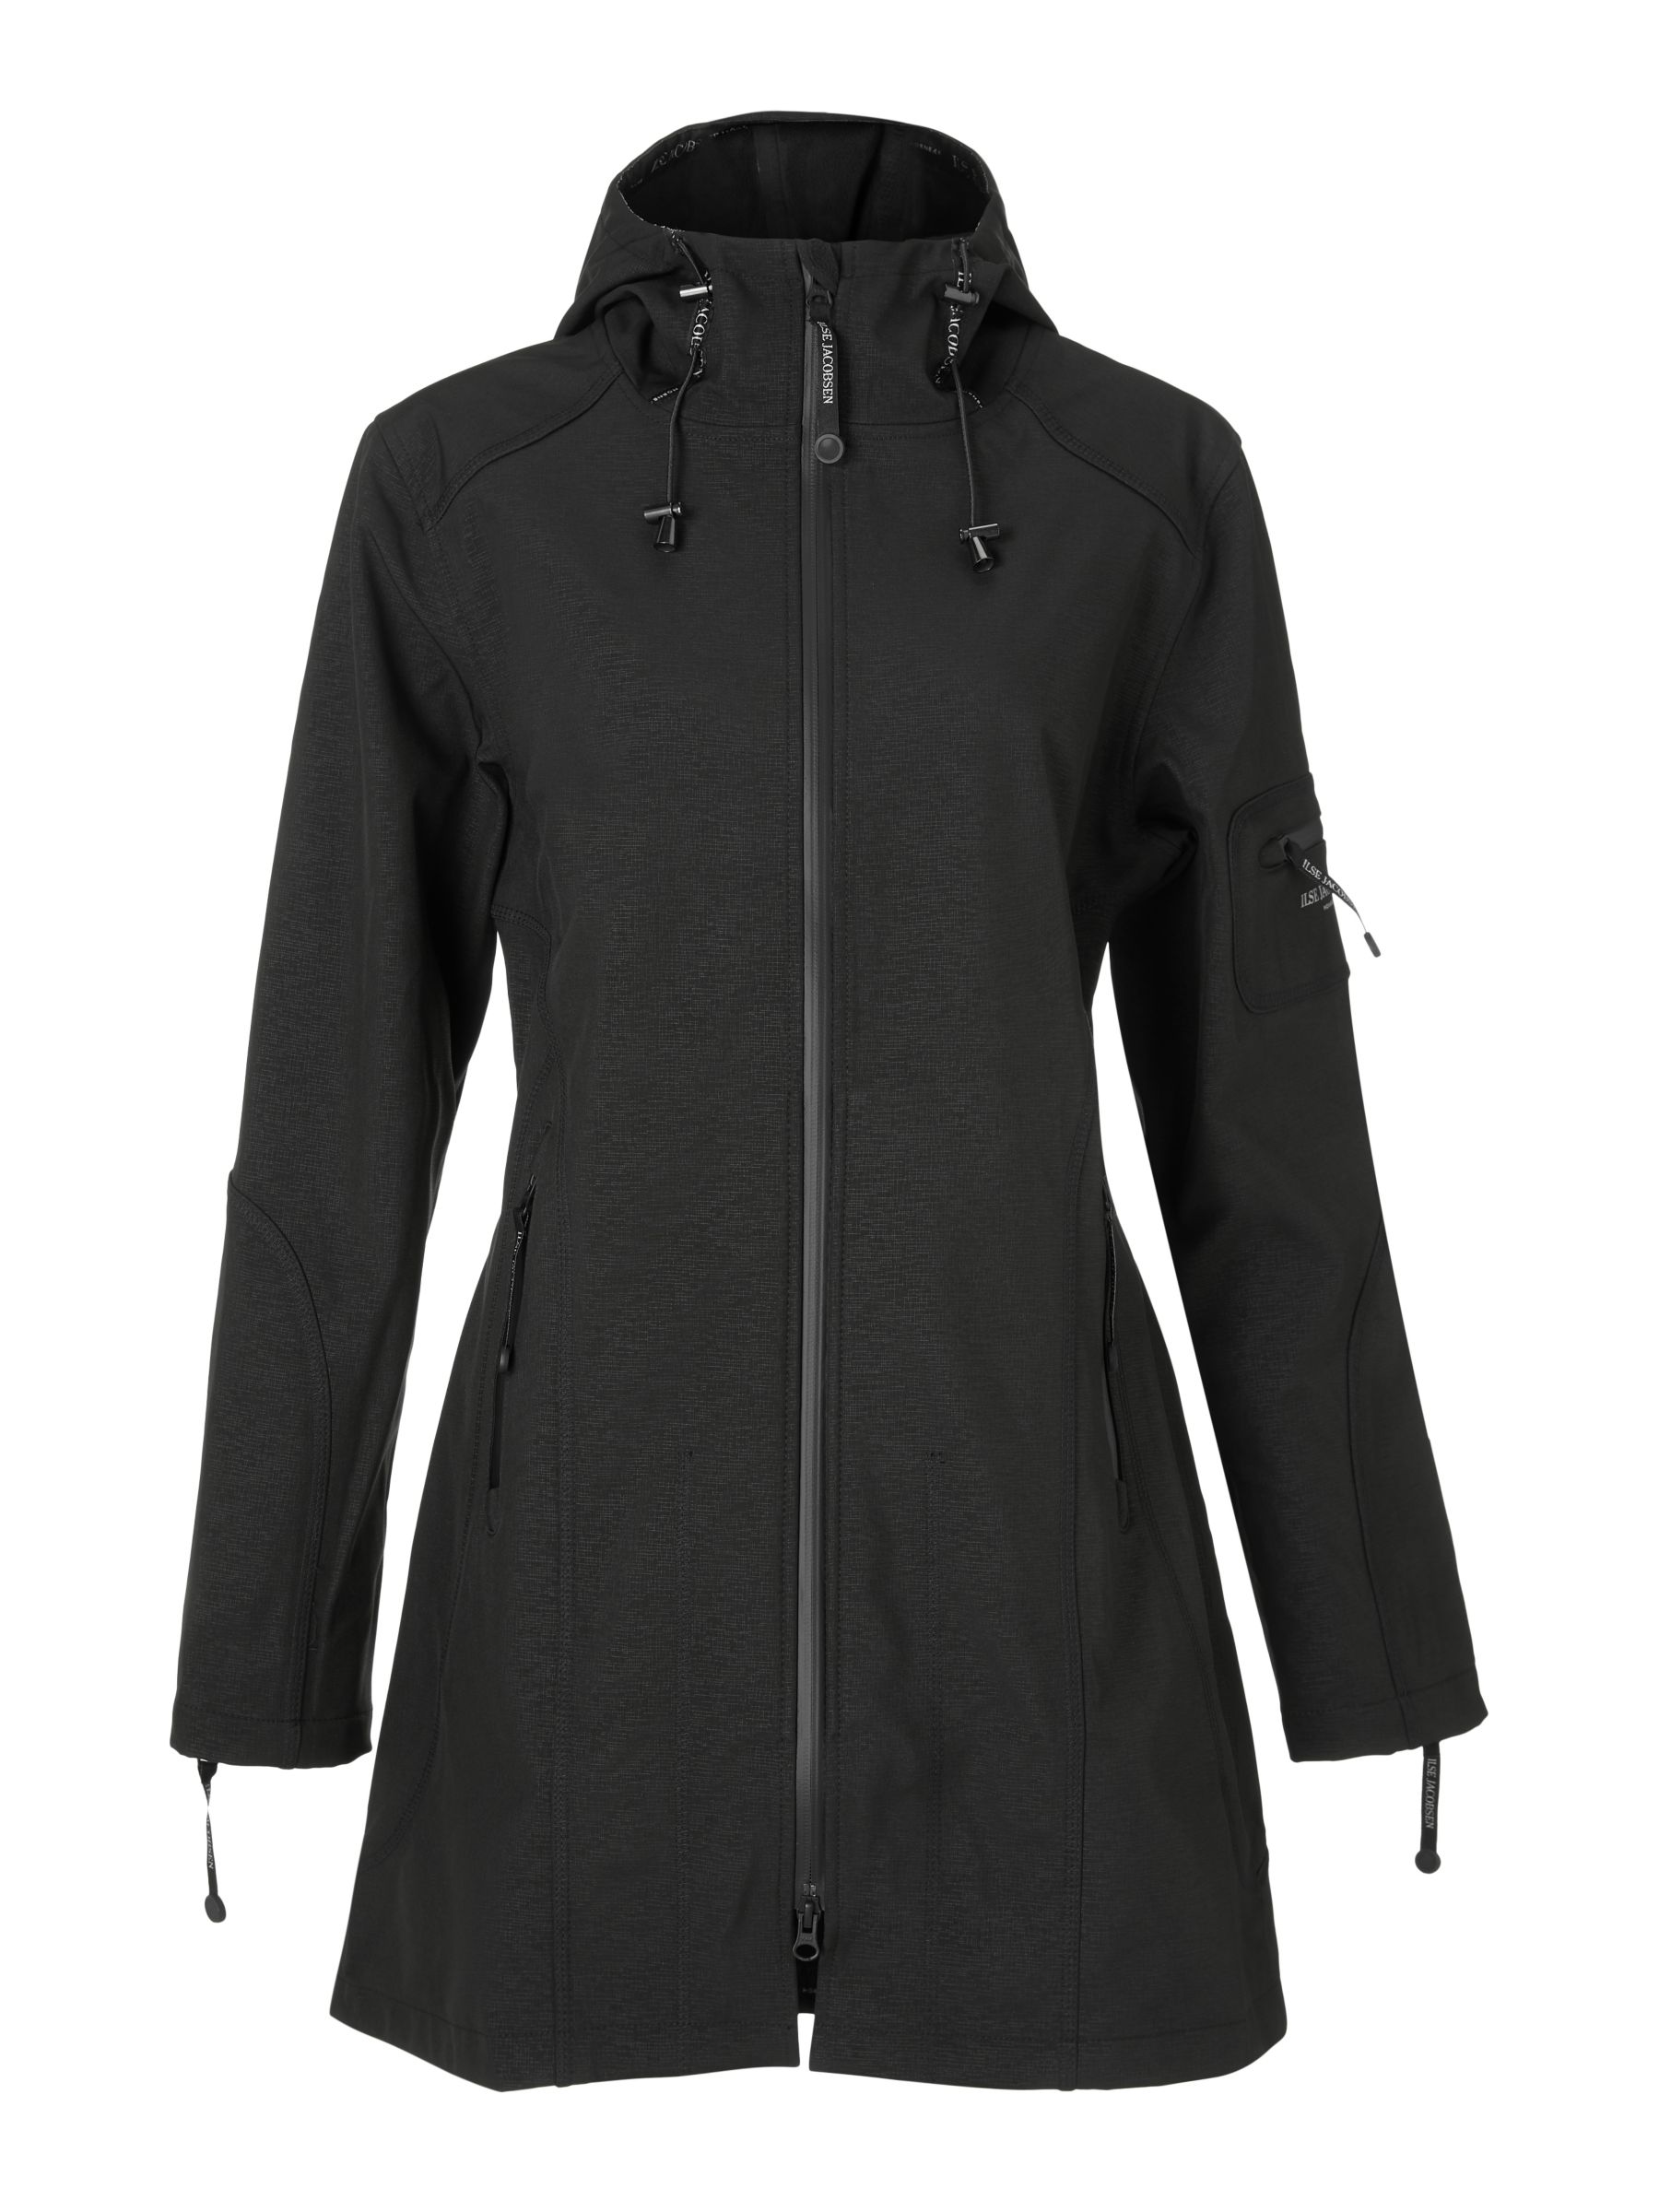 Ilse Jacobsen Hornbæk 3/4 Length Raincoat, Black at John Lewis & Partners